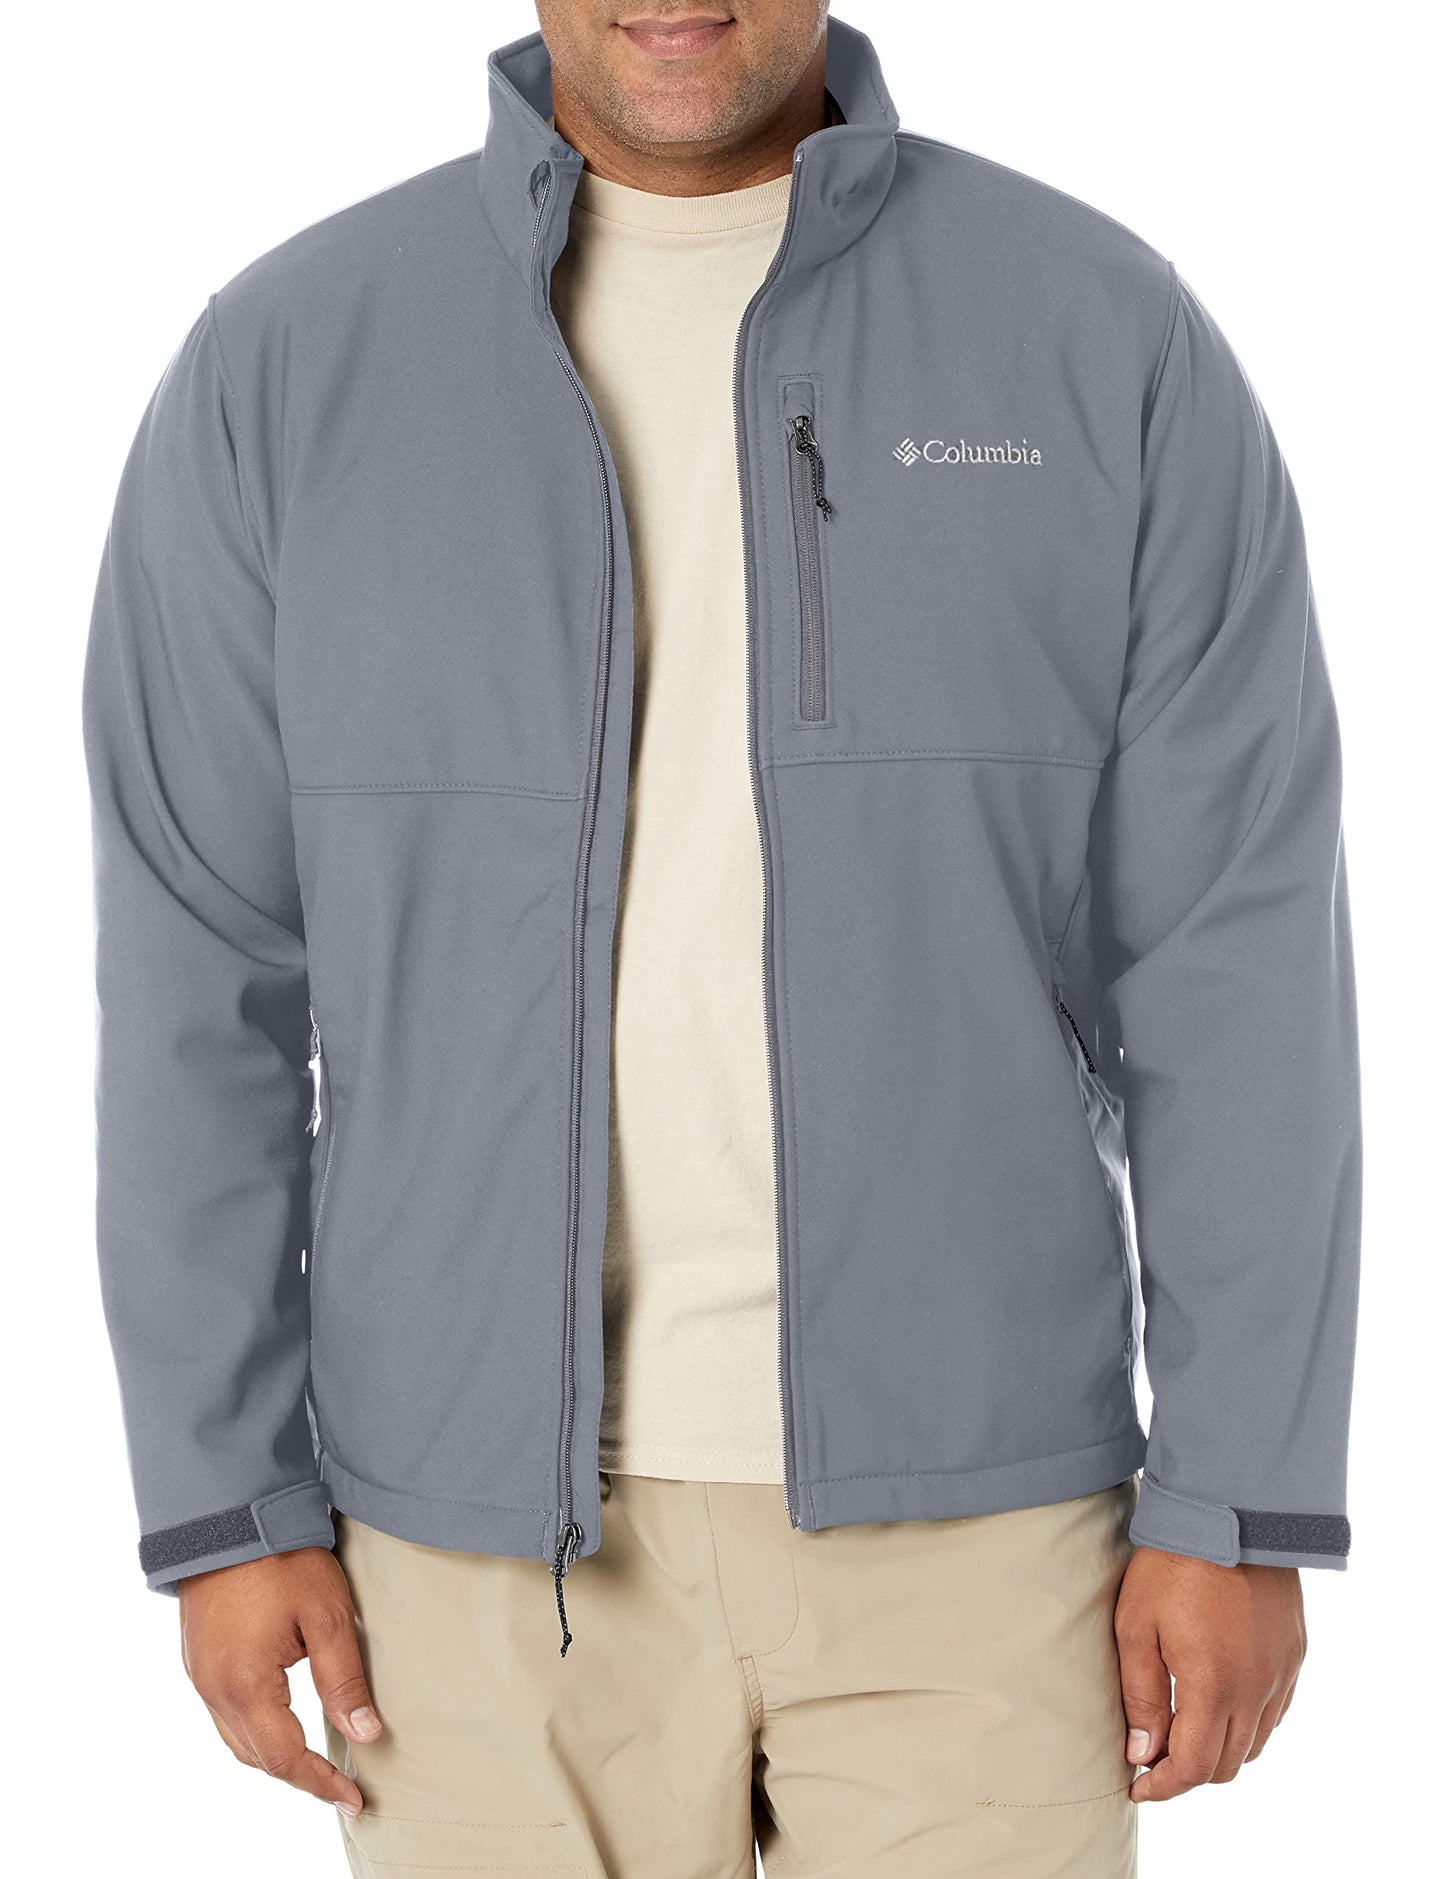 Columbia Men's Synthetic Jacket (WM6044-53_Graphite_Large) 